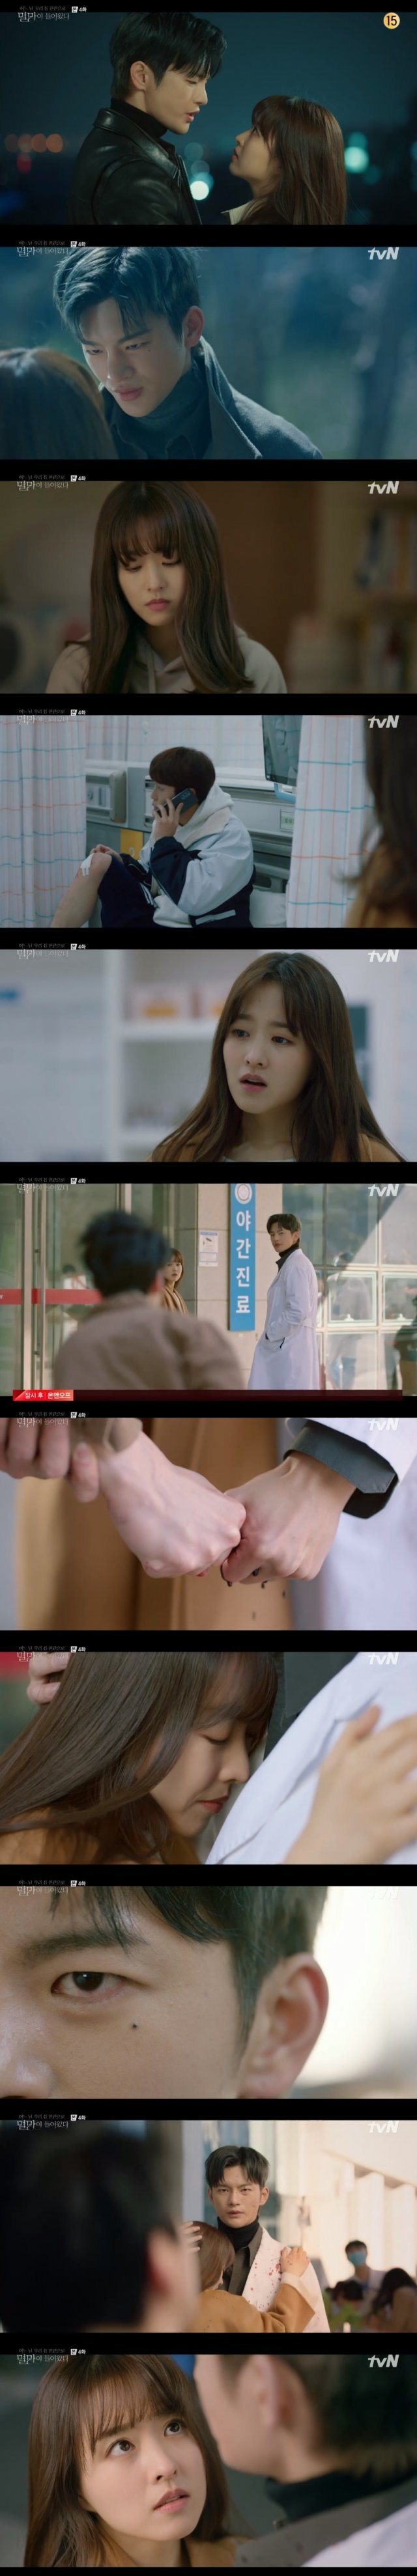 tvN ‘어느 날 우리집 현관으로 멸망이 들어왔다’ 캡처 © 뉴스1